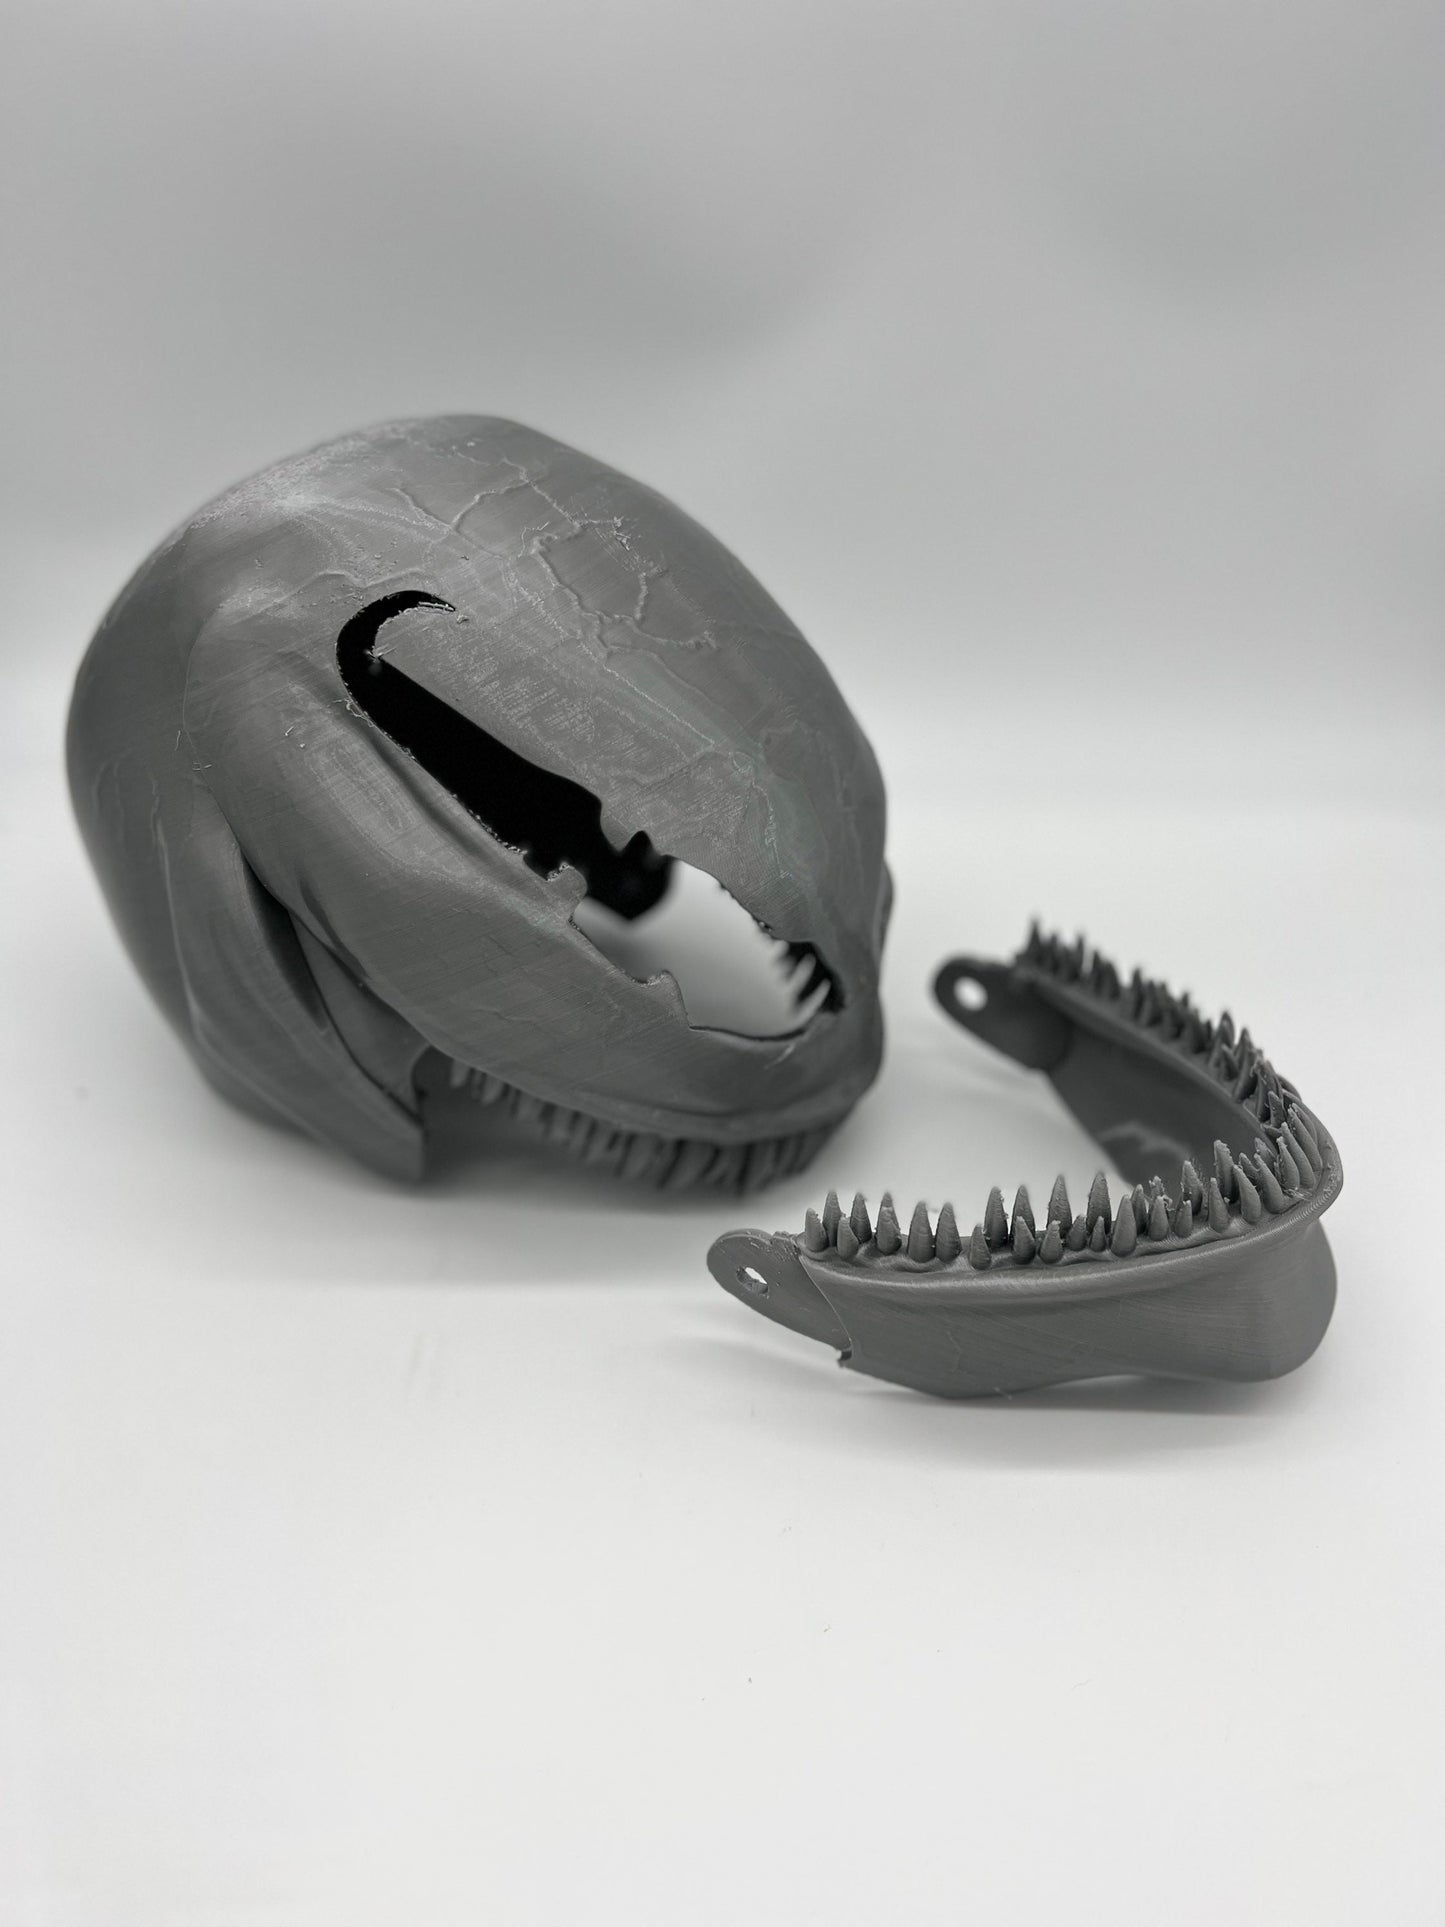 Venom Cosplay Helmet